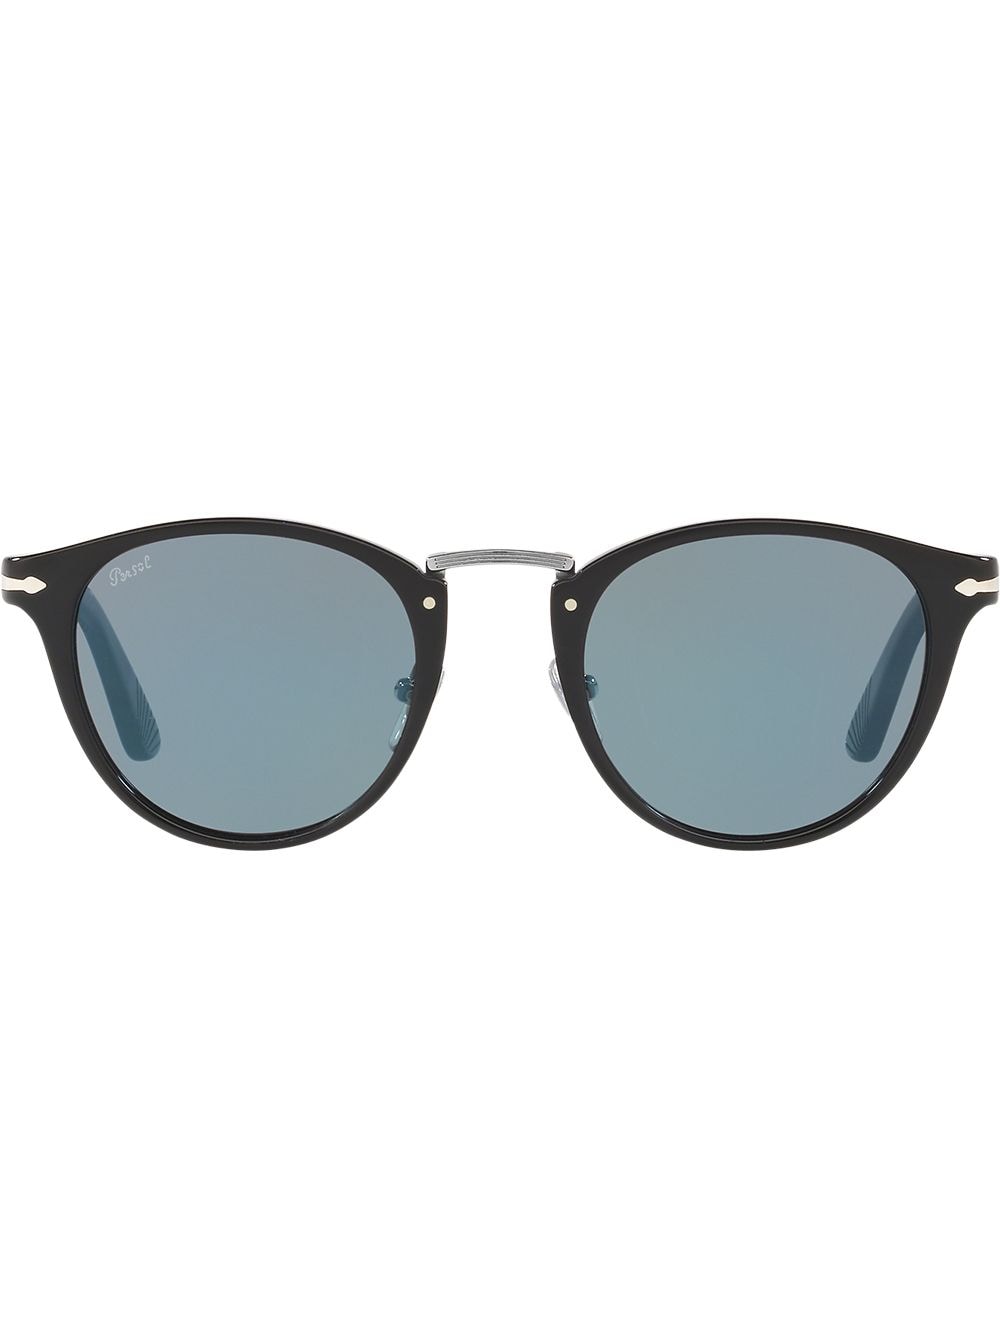 Persol round sunglasses - Black von Persol